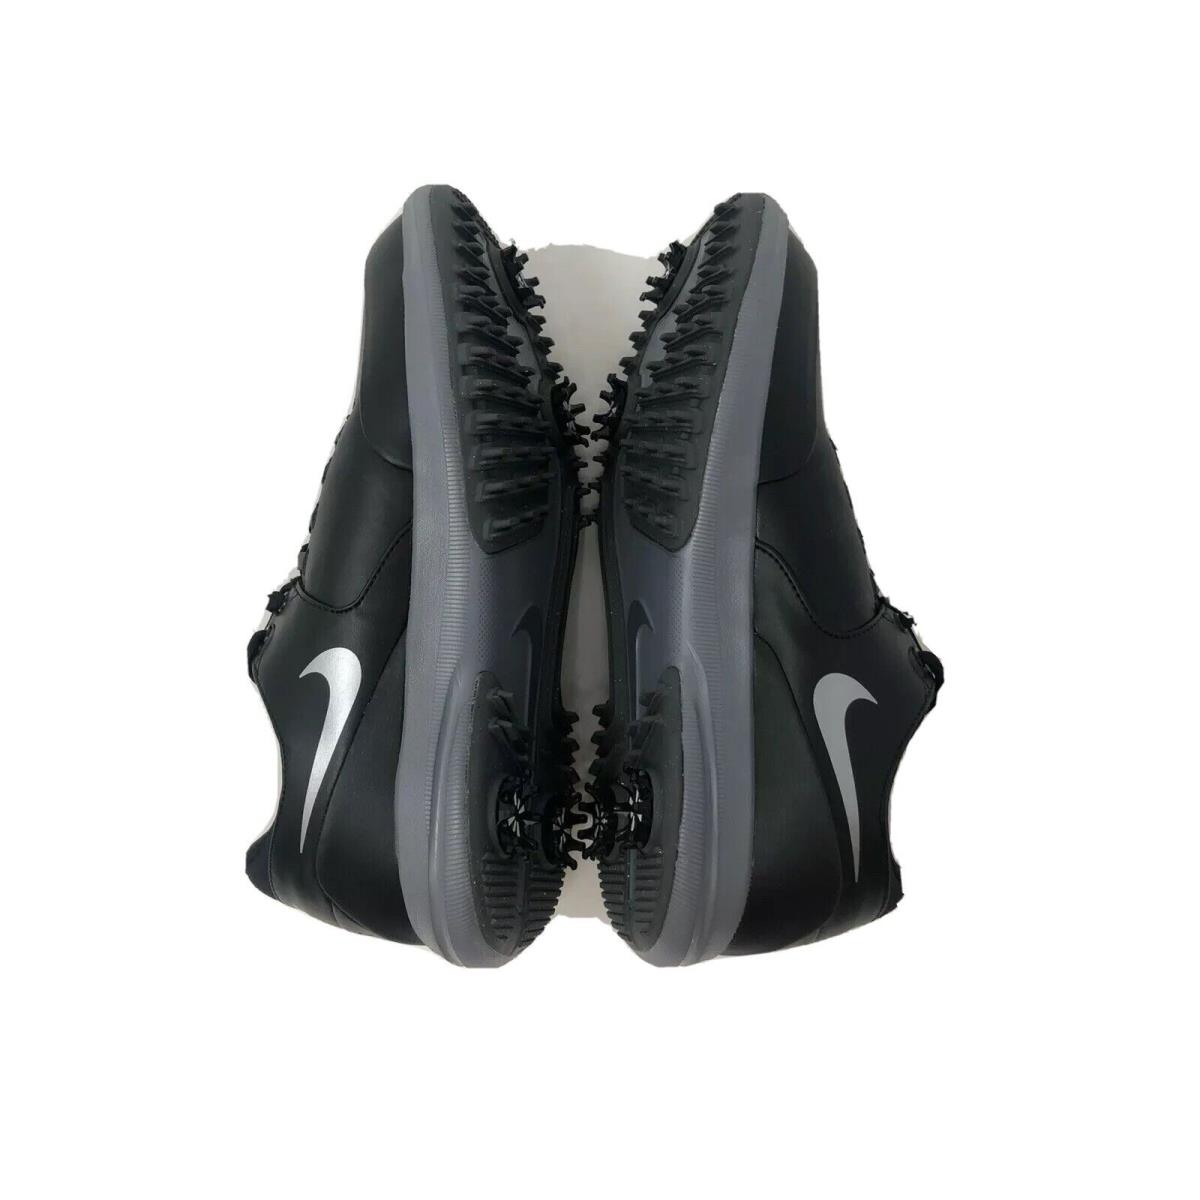 Sur hélice Desesperado Nike Air Zoom Accurate Mens Golf Shoes 909723_003 Black/grey 8 9 9.5 11 12  | - Nike shoes Air Zoom Accurate - Black | SporTipTop